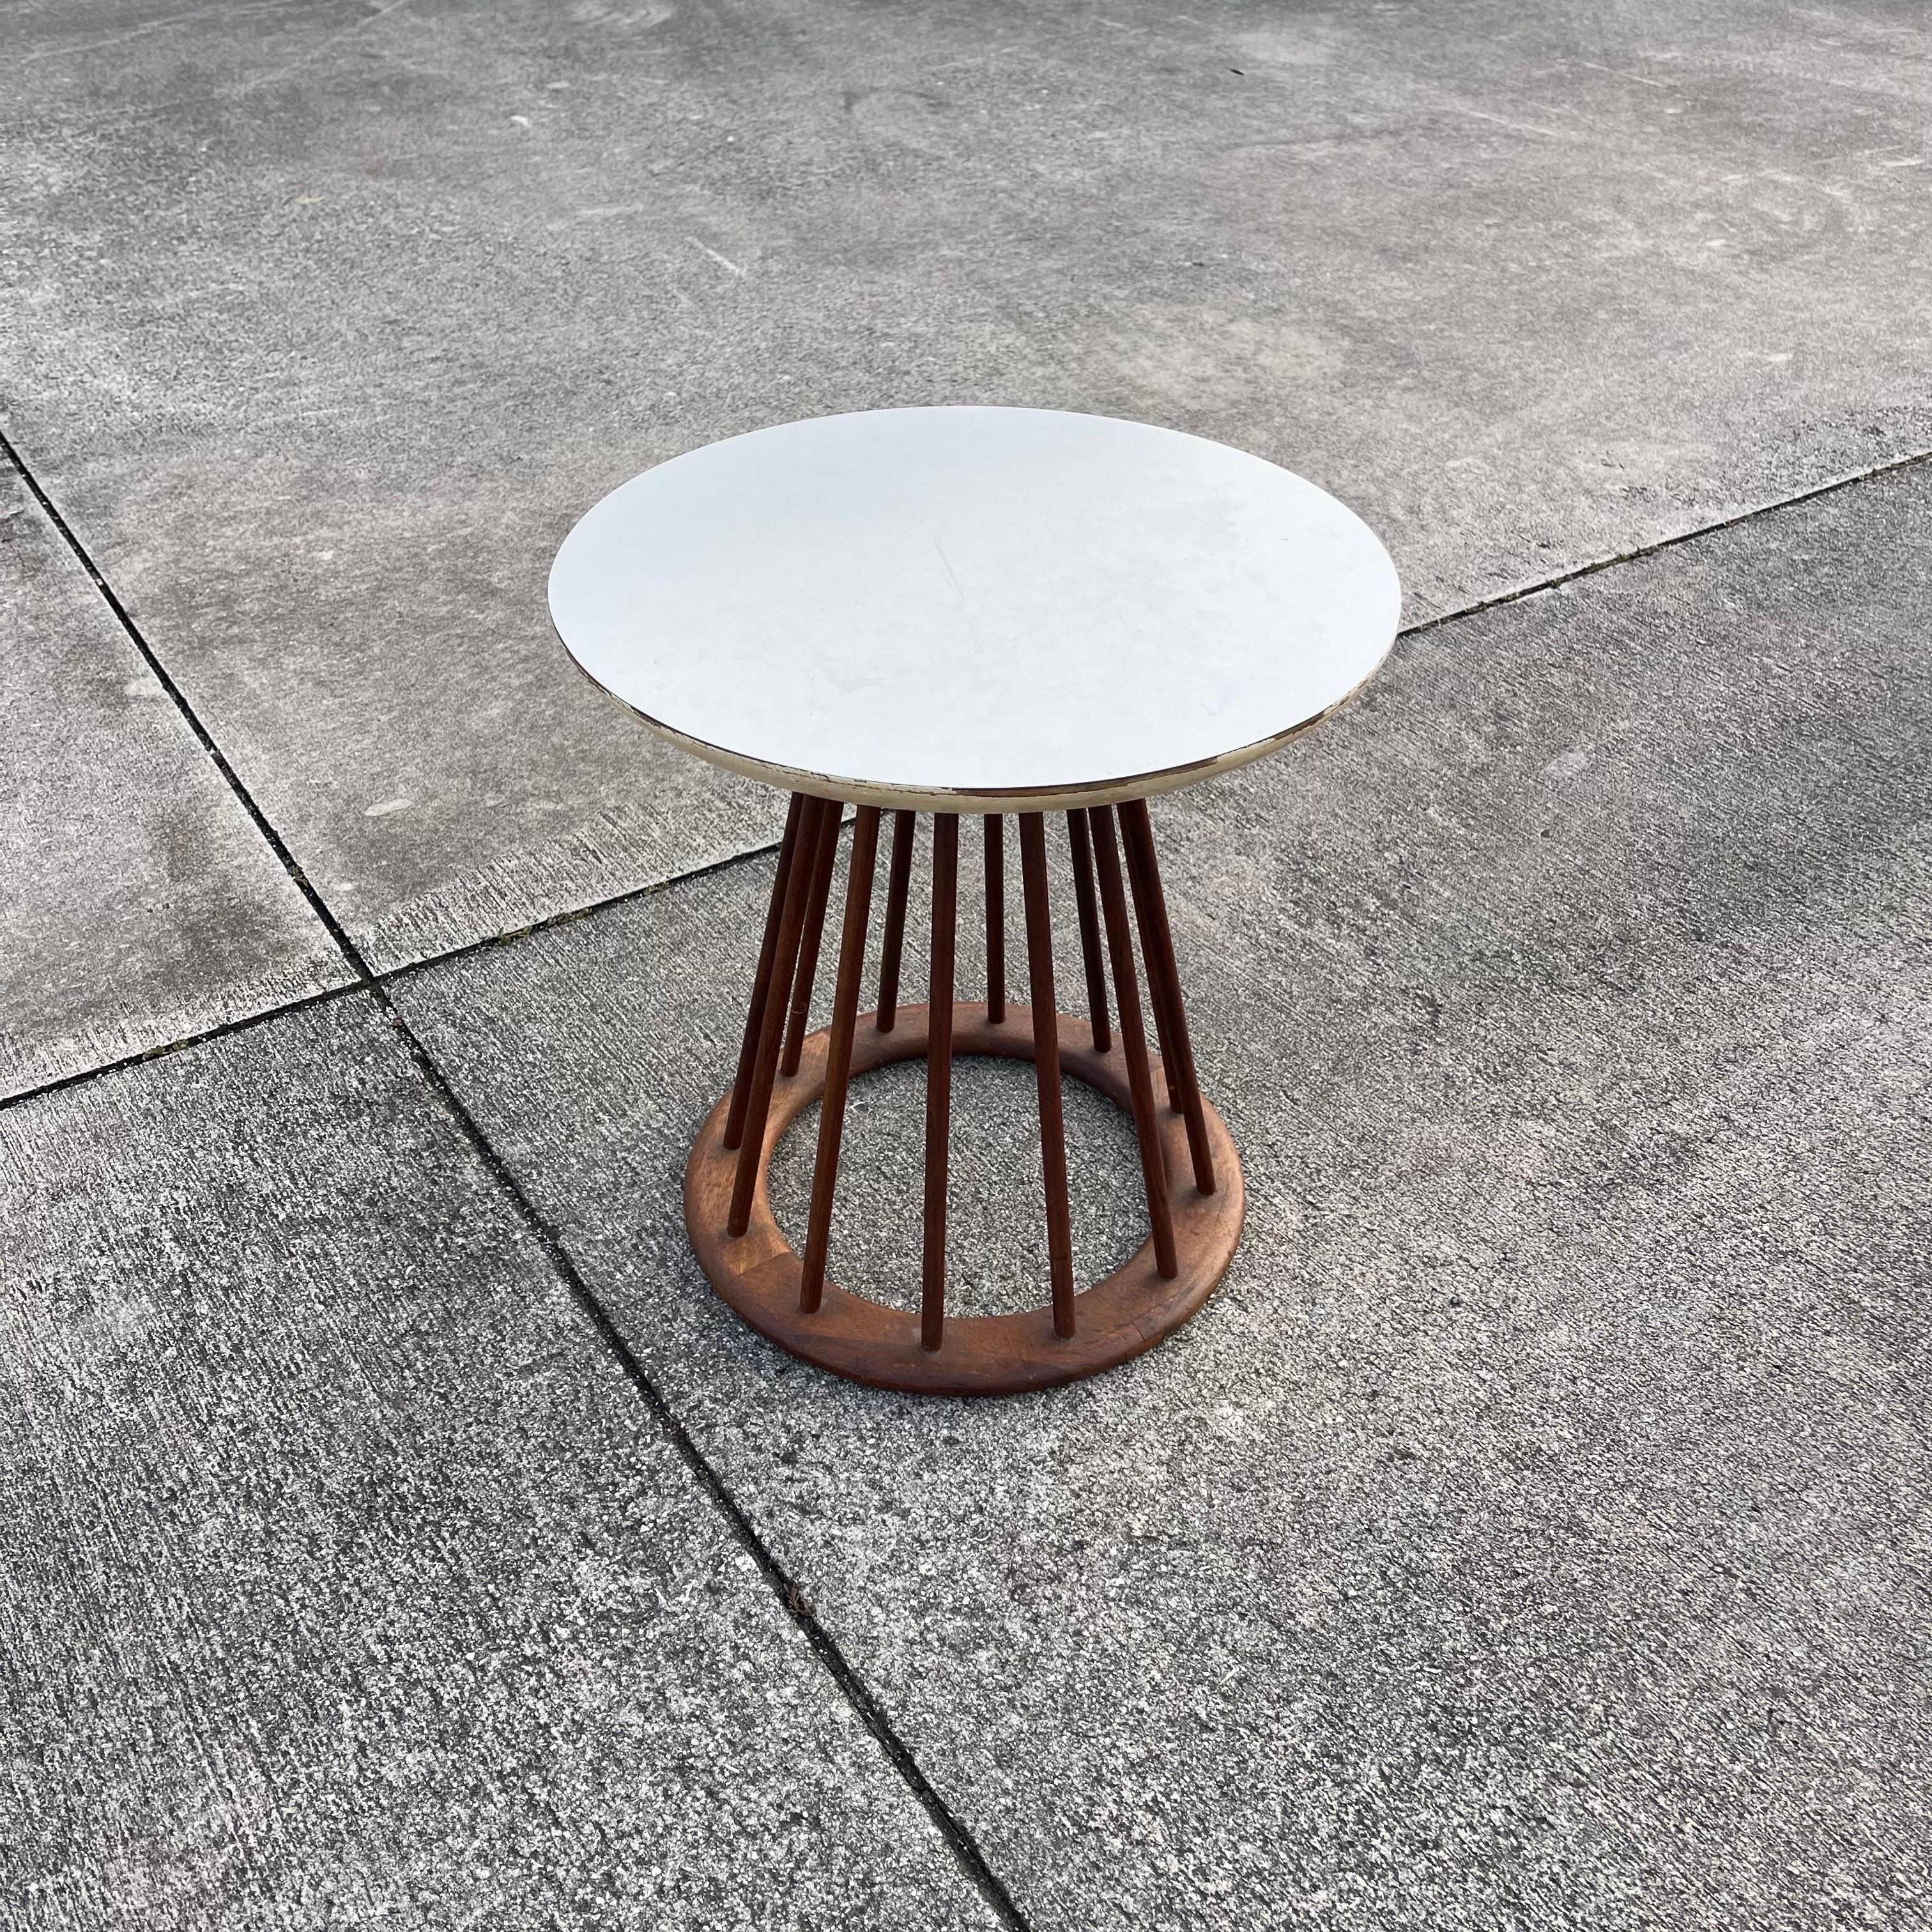 Laminate Arthur Umanoff Walnut Spindle Side Table, Mid-Century Modern c.1960s For Sale